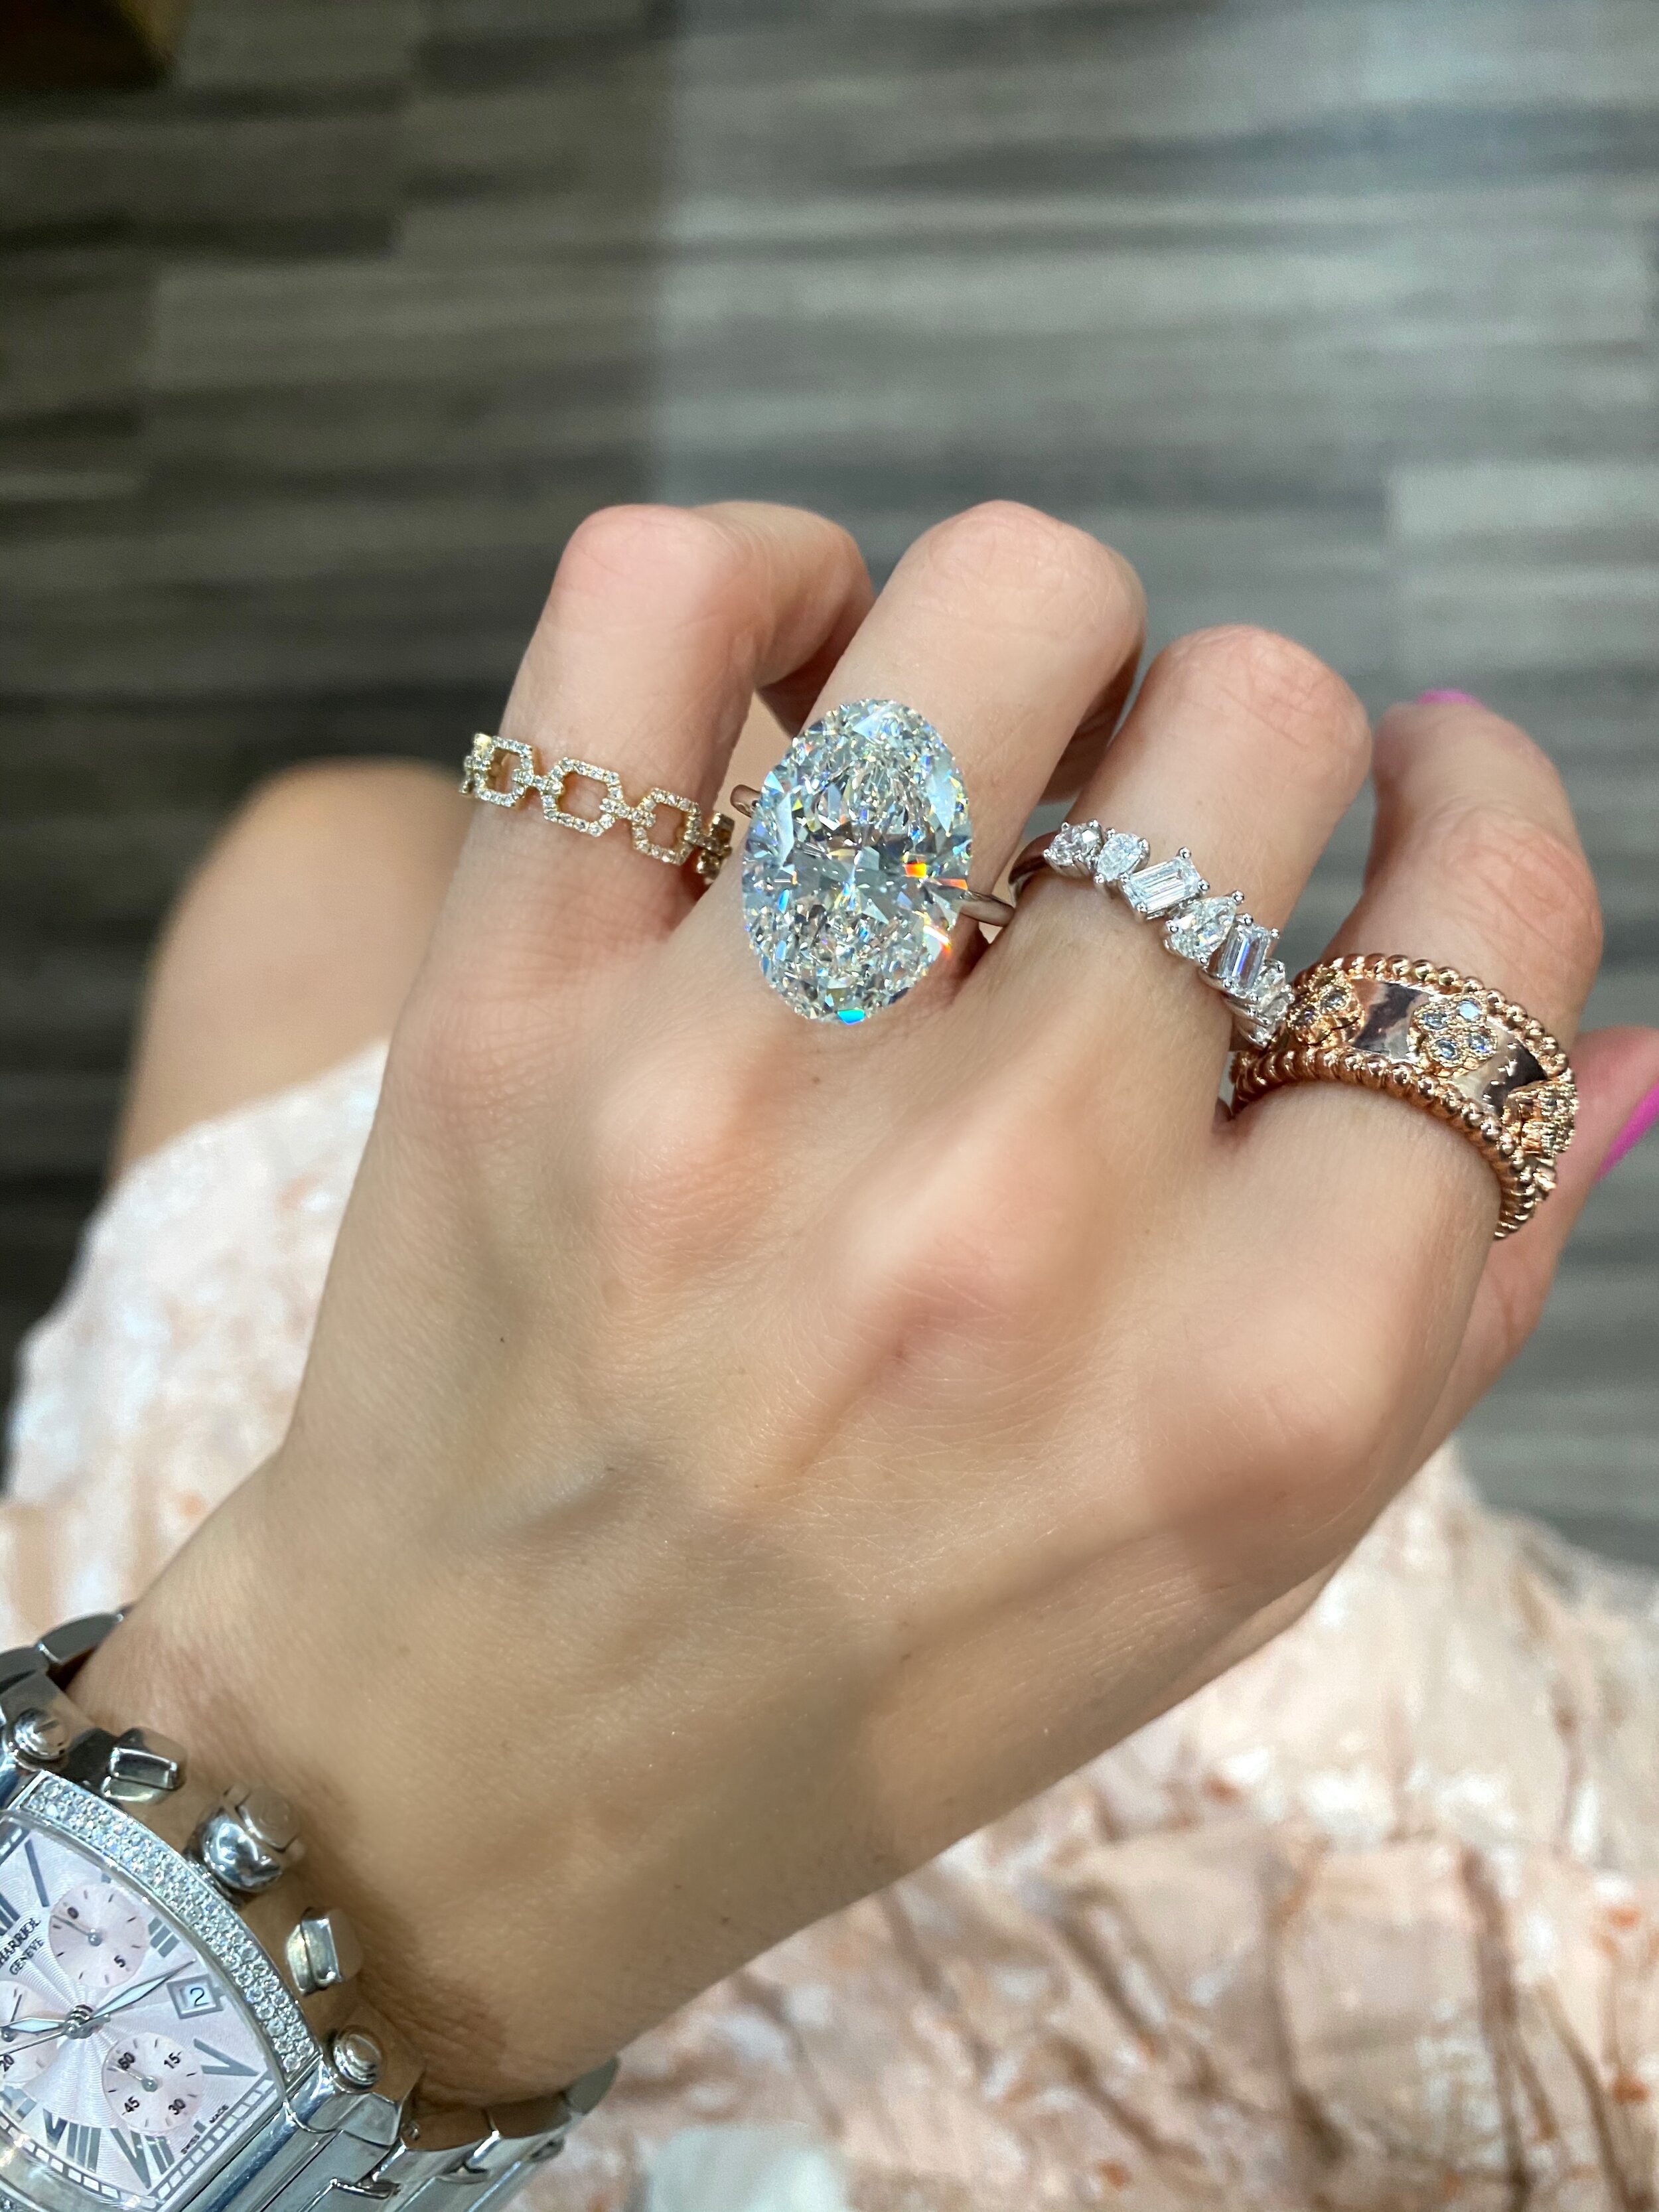 Vernietigen onderdak als A 10 Carat Diamond Engagement Ring, Pretty Please — Miss Diamond Ring |  Engagement ring concierge, Diamond concierge